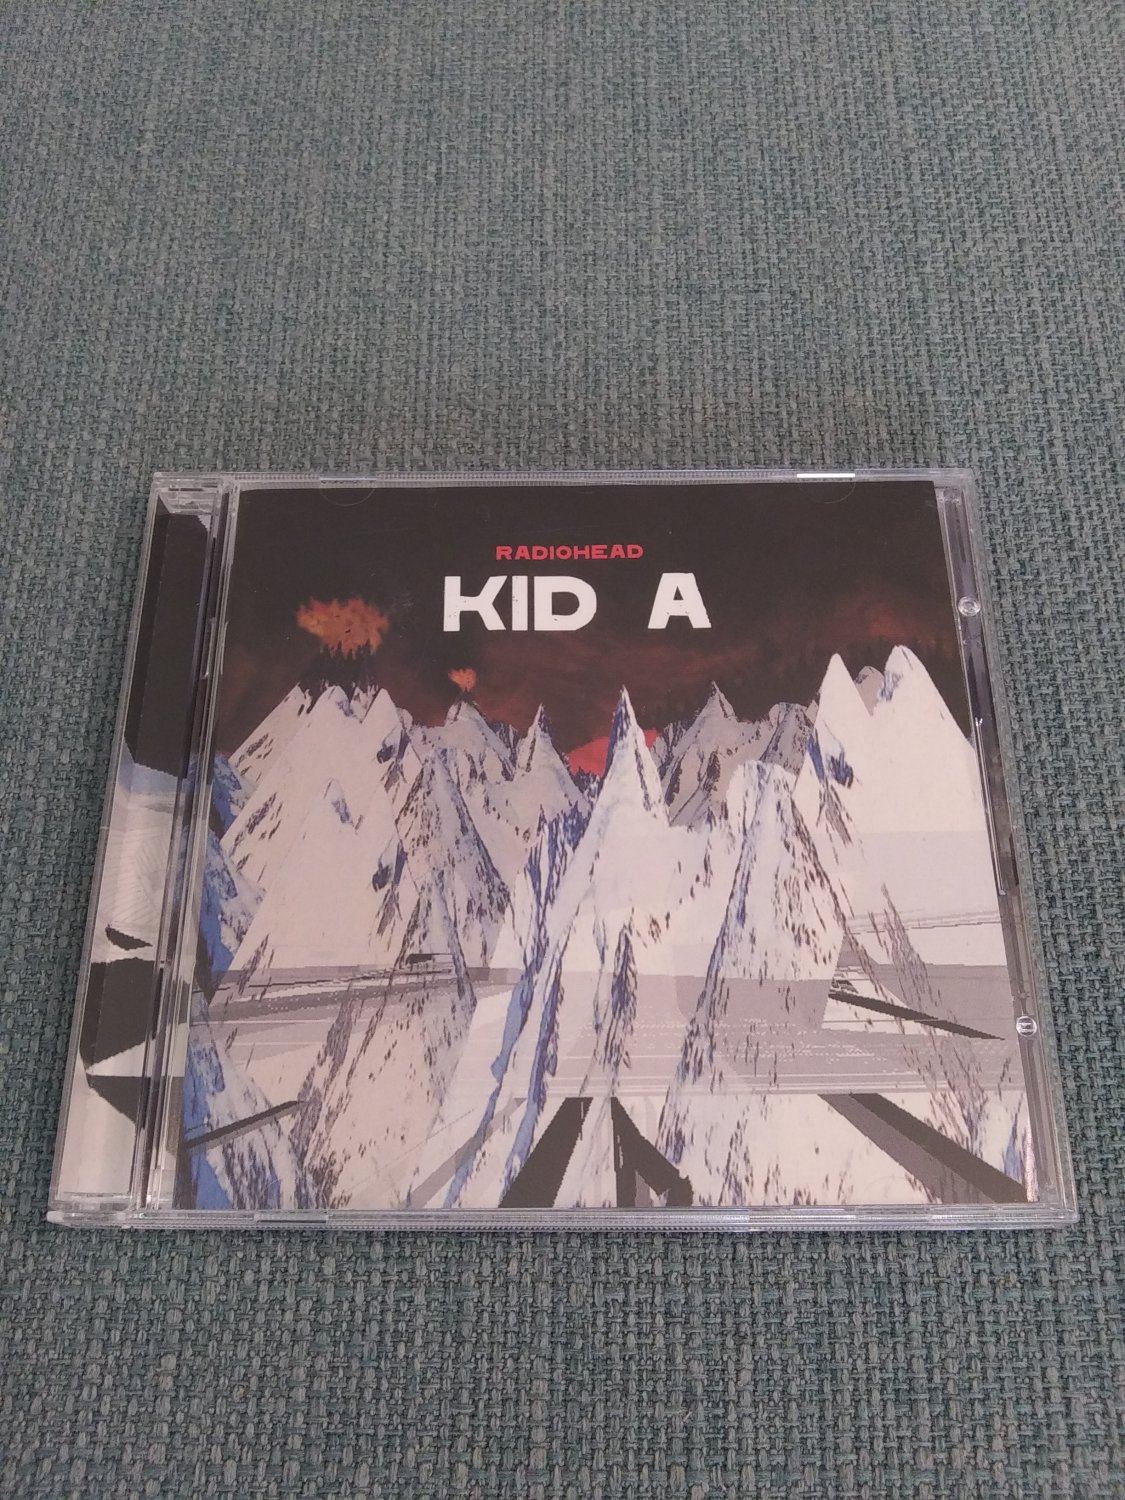 Radiohead Kid A CD (2000, Music)